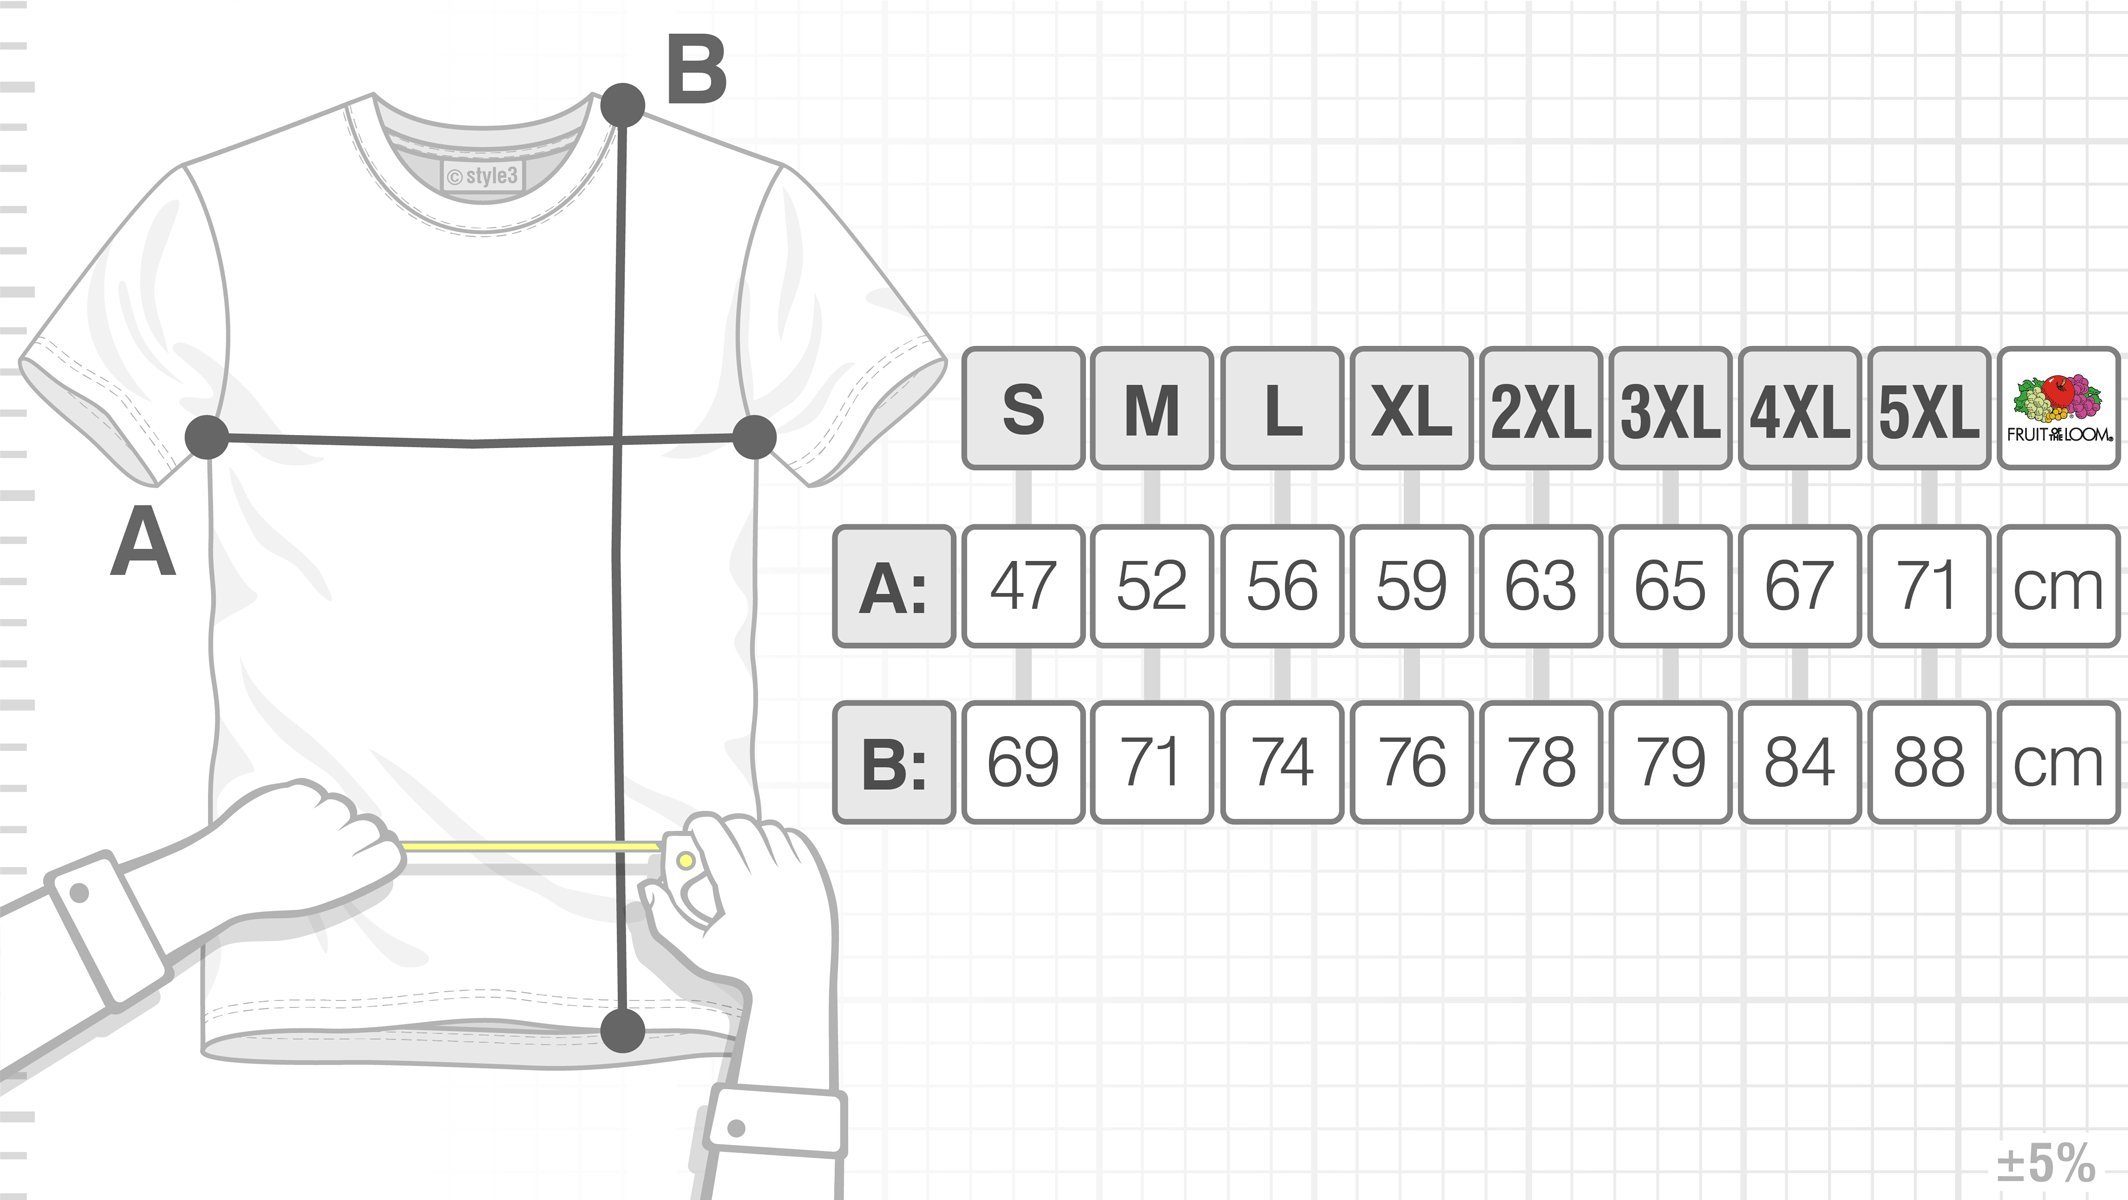 Herren grün style3 gans Print-Shirt videospiel Gänse T-Shirt Panik